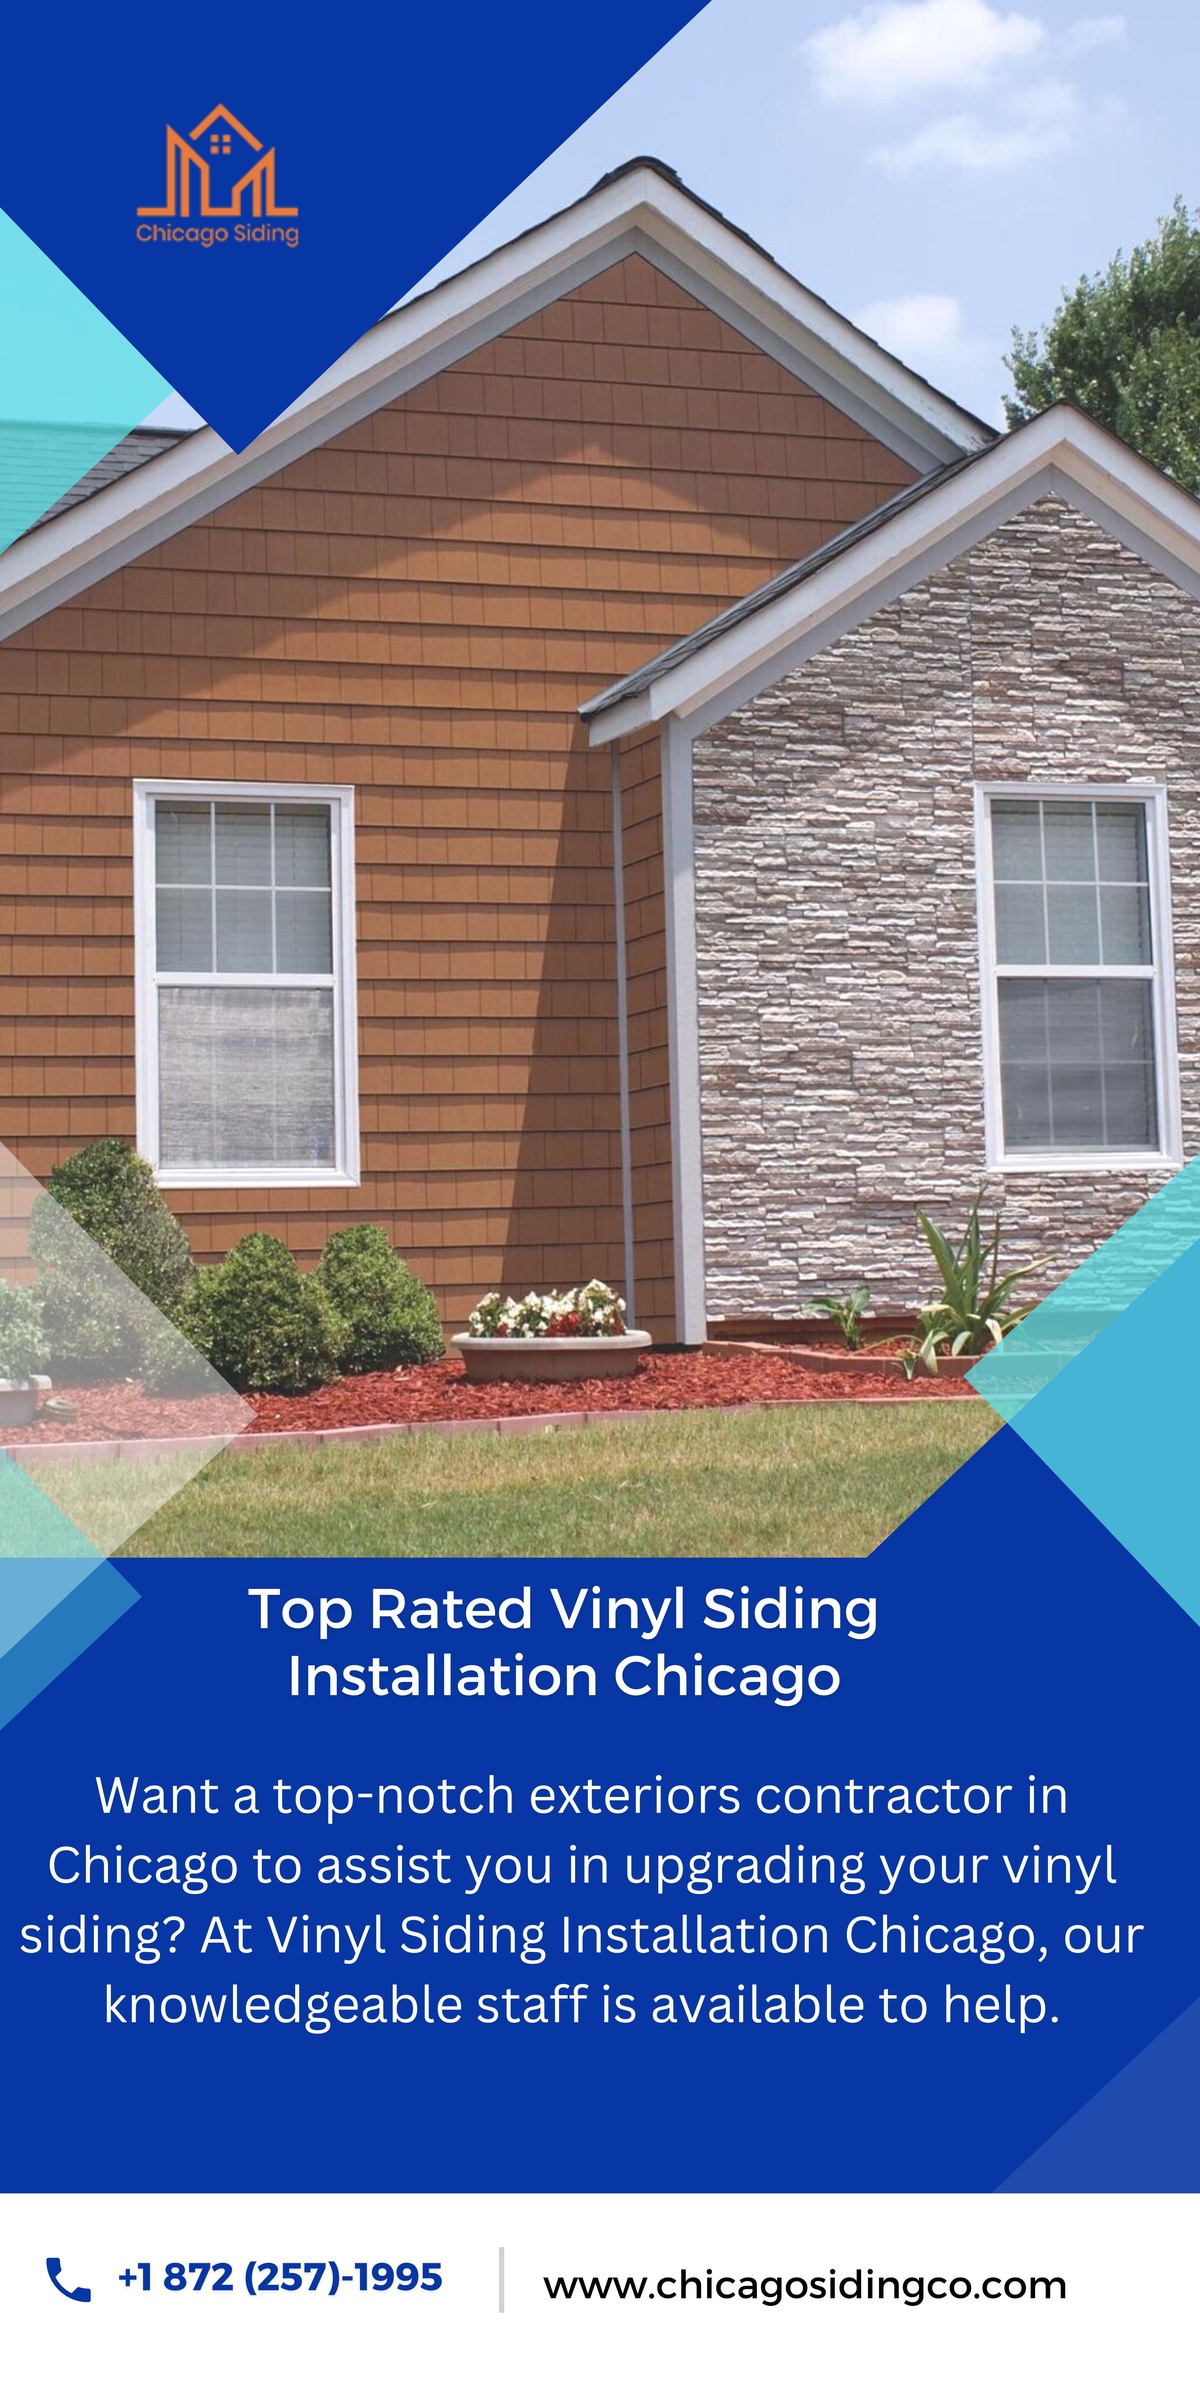 Benefits of Vinyl Siding Installation in Chicago